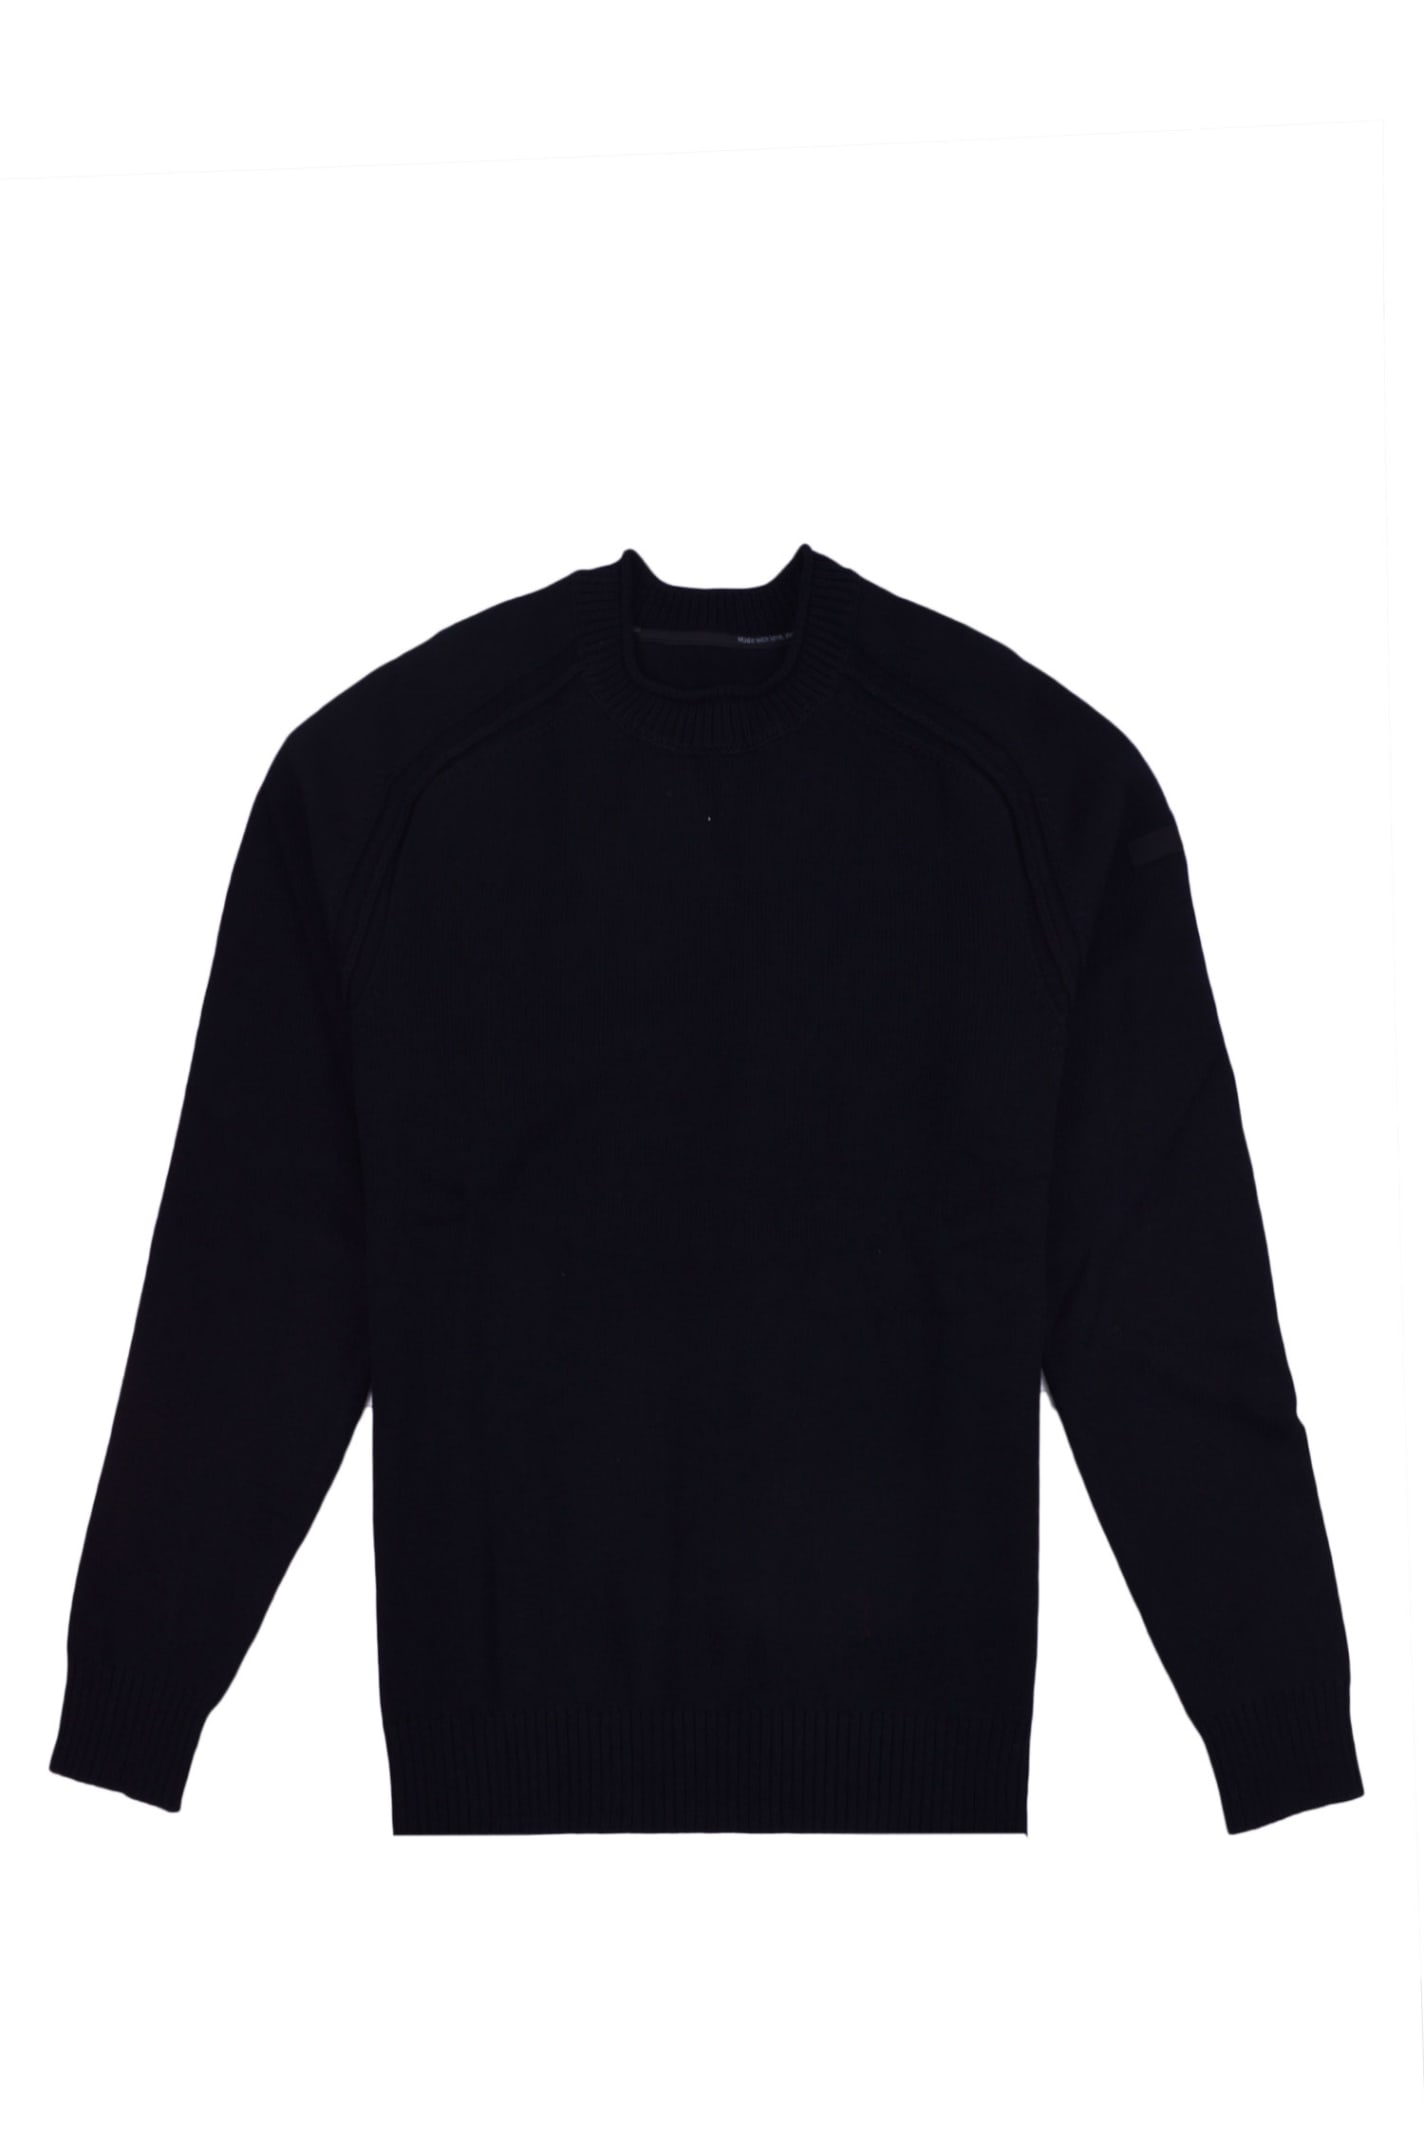 Shop Rrd - Roberto Ricci Design Sweater